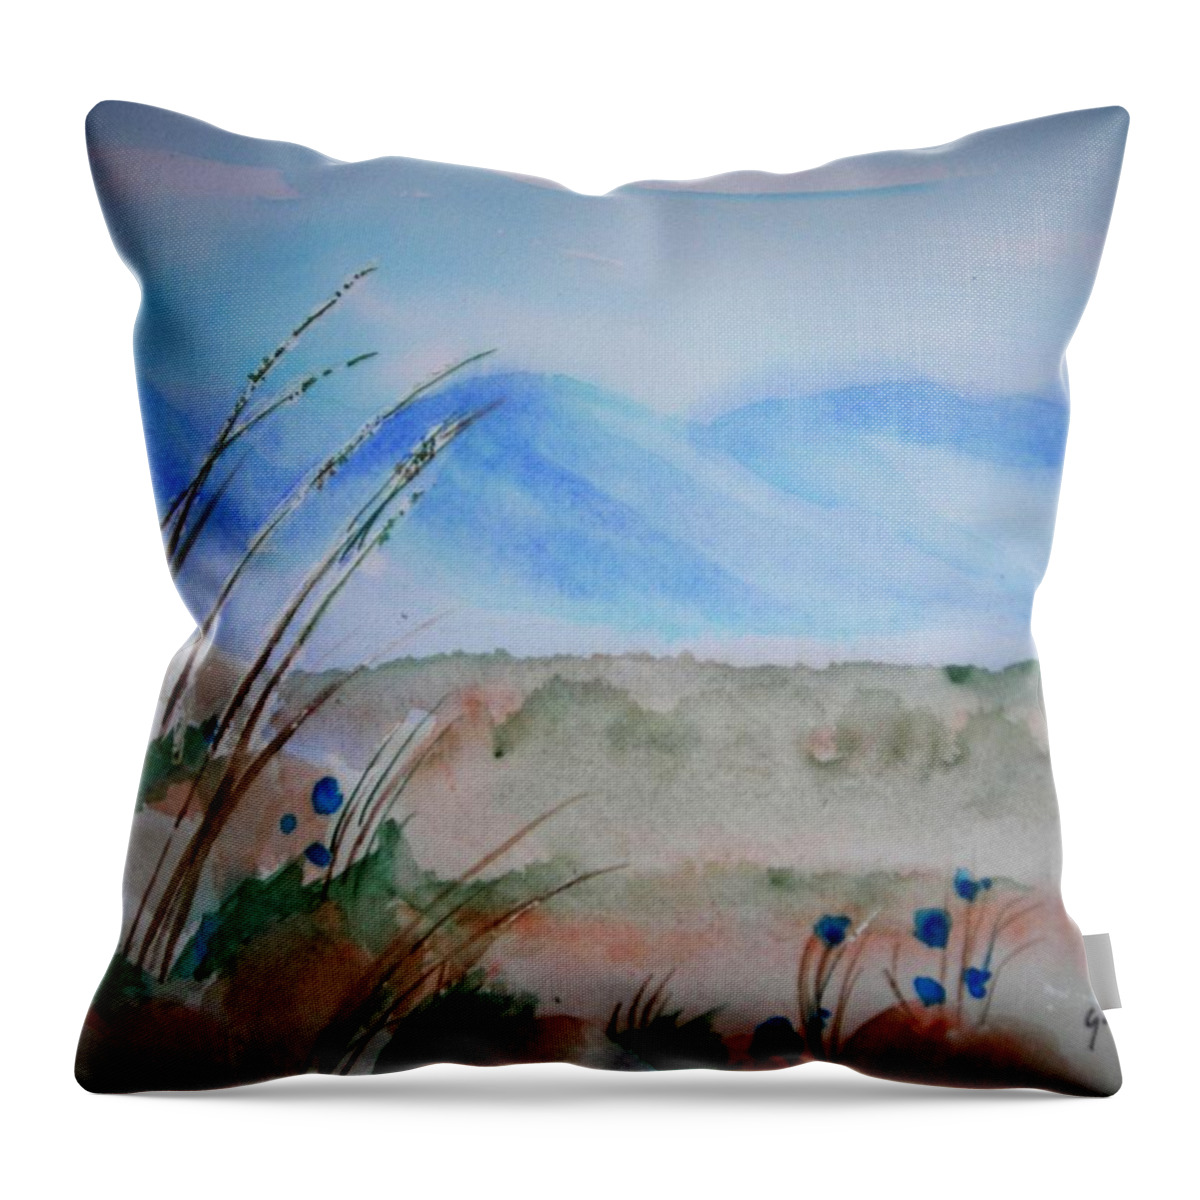 Landscape Throw Pillow featuring the painting Landscape by Gloria Dietz-Kiebron